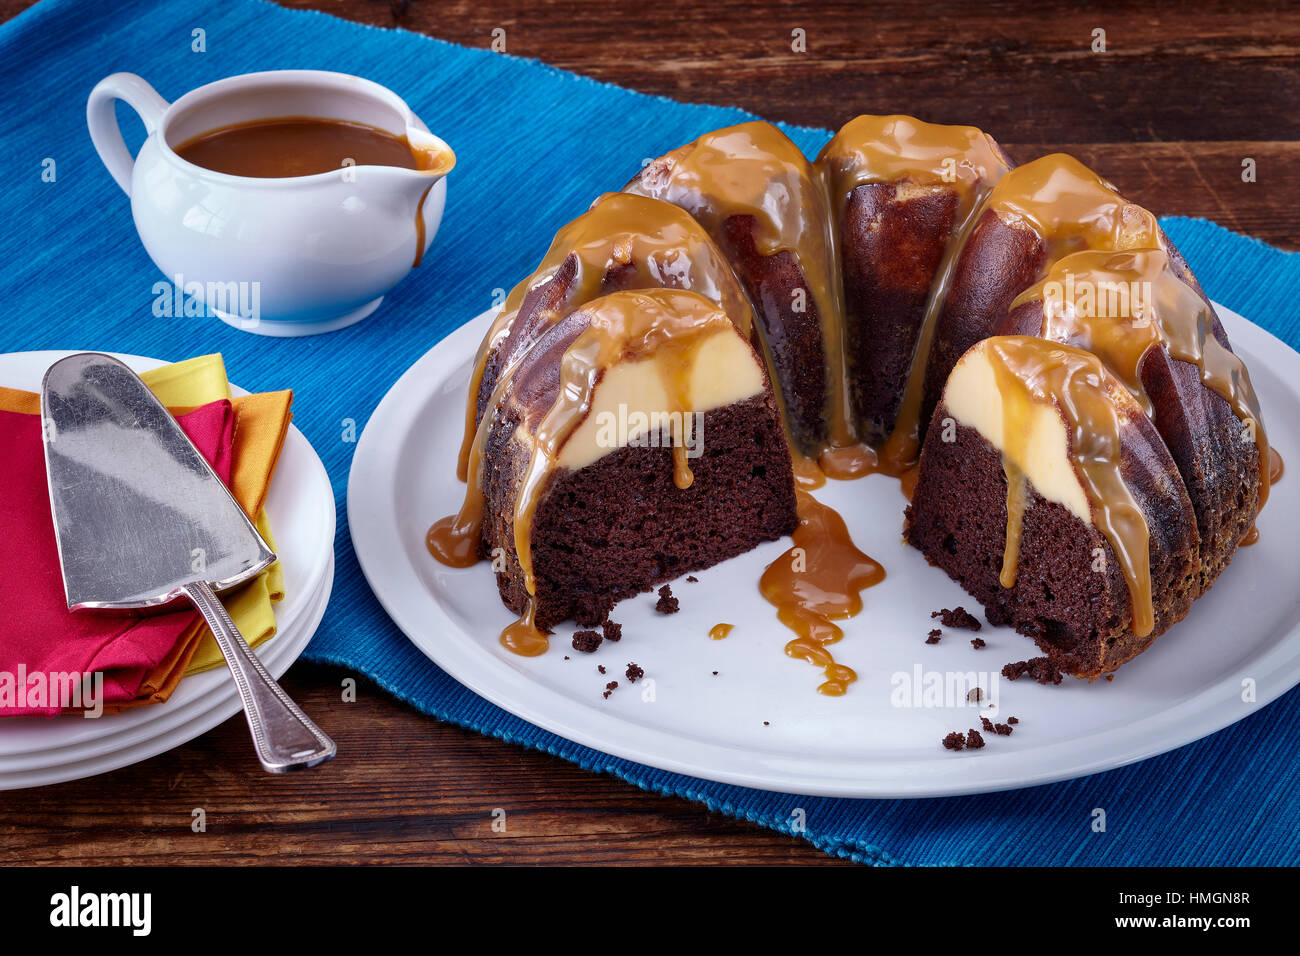 Choco flan bundt cake Stock Photo